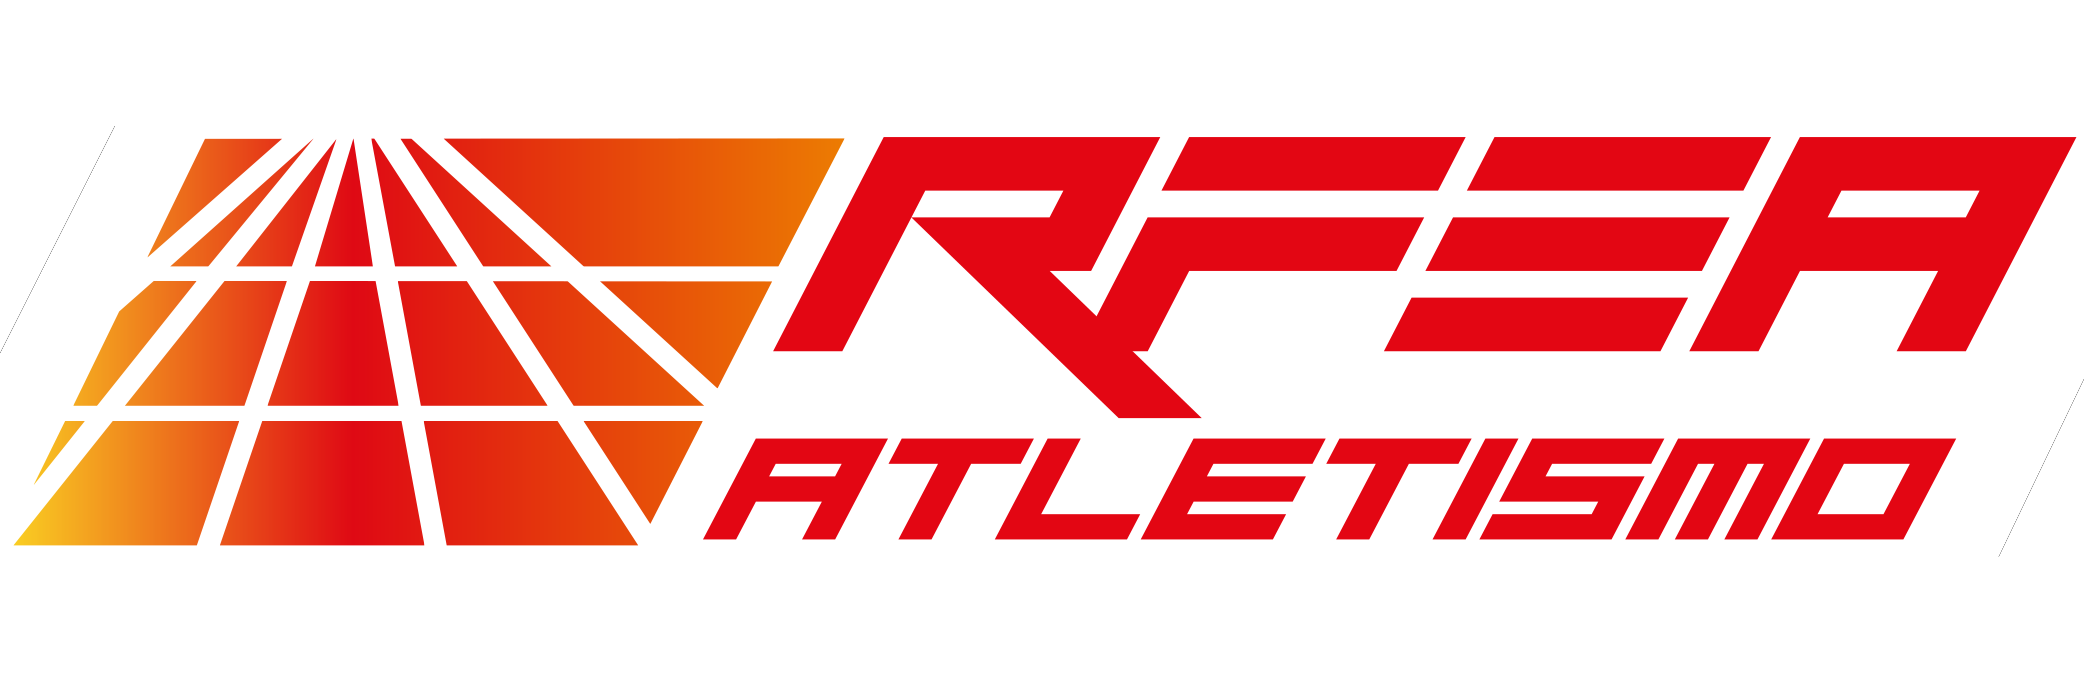 RFEA logo